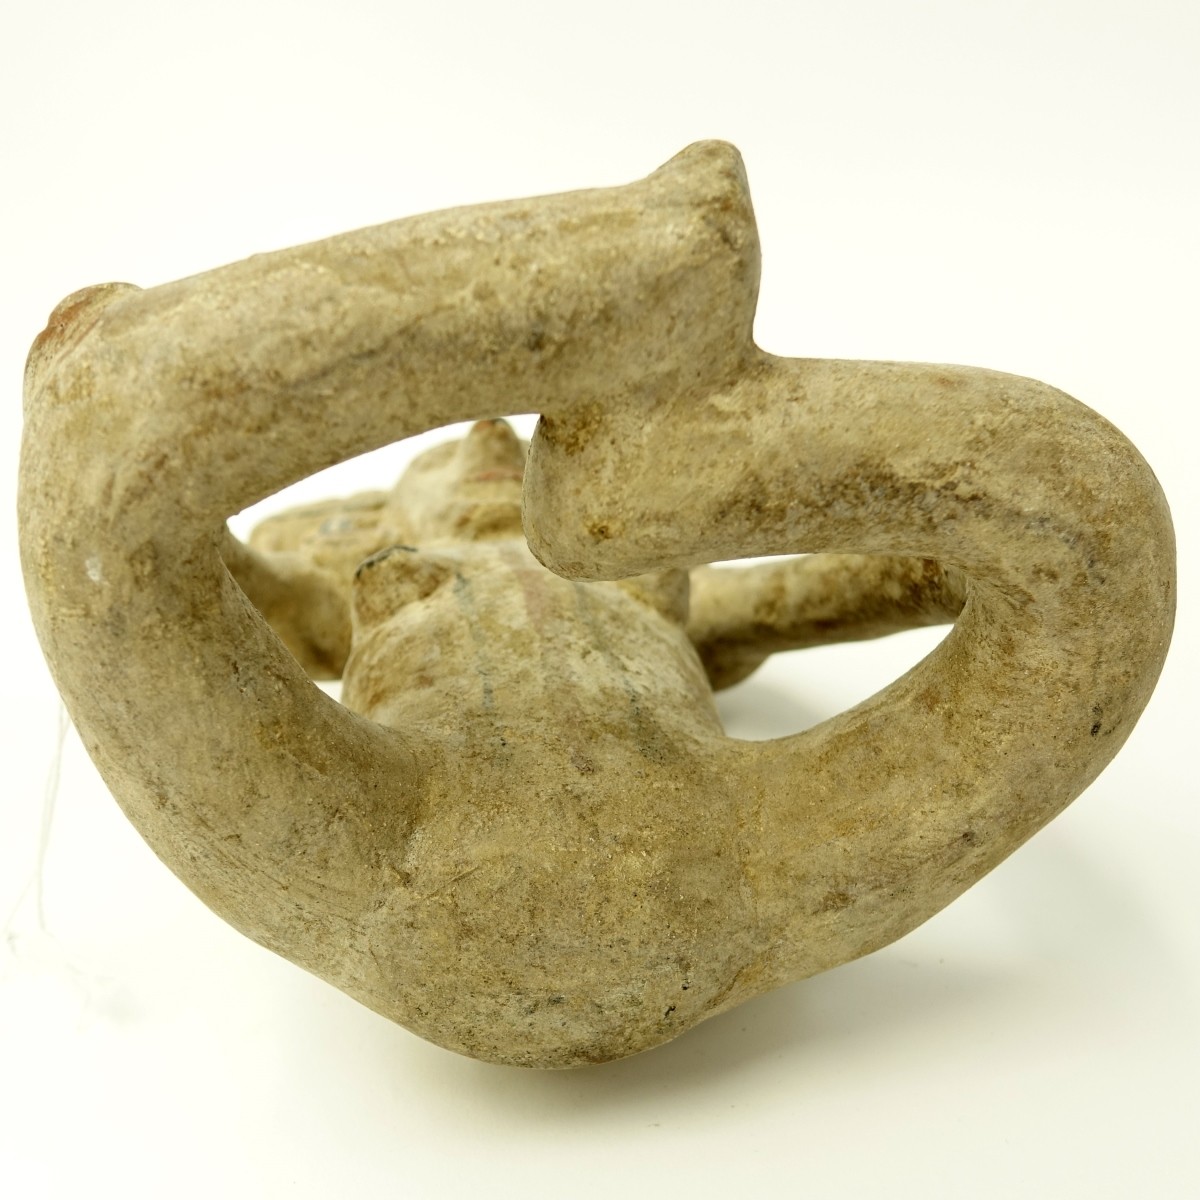 Pre Columbian Seated Figurine